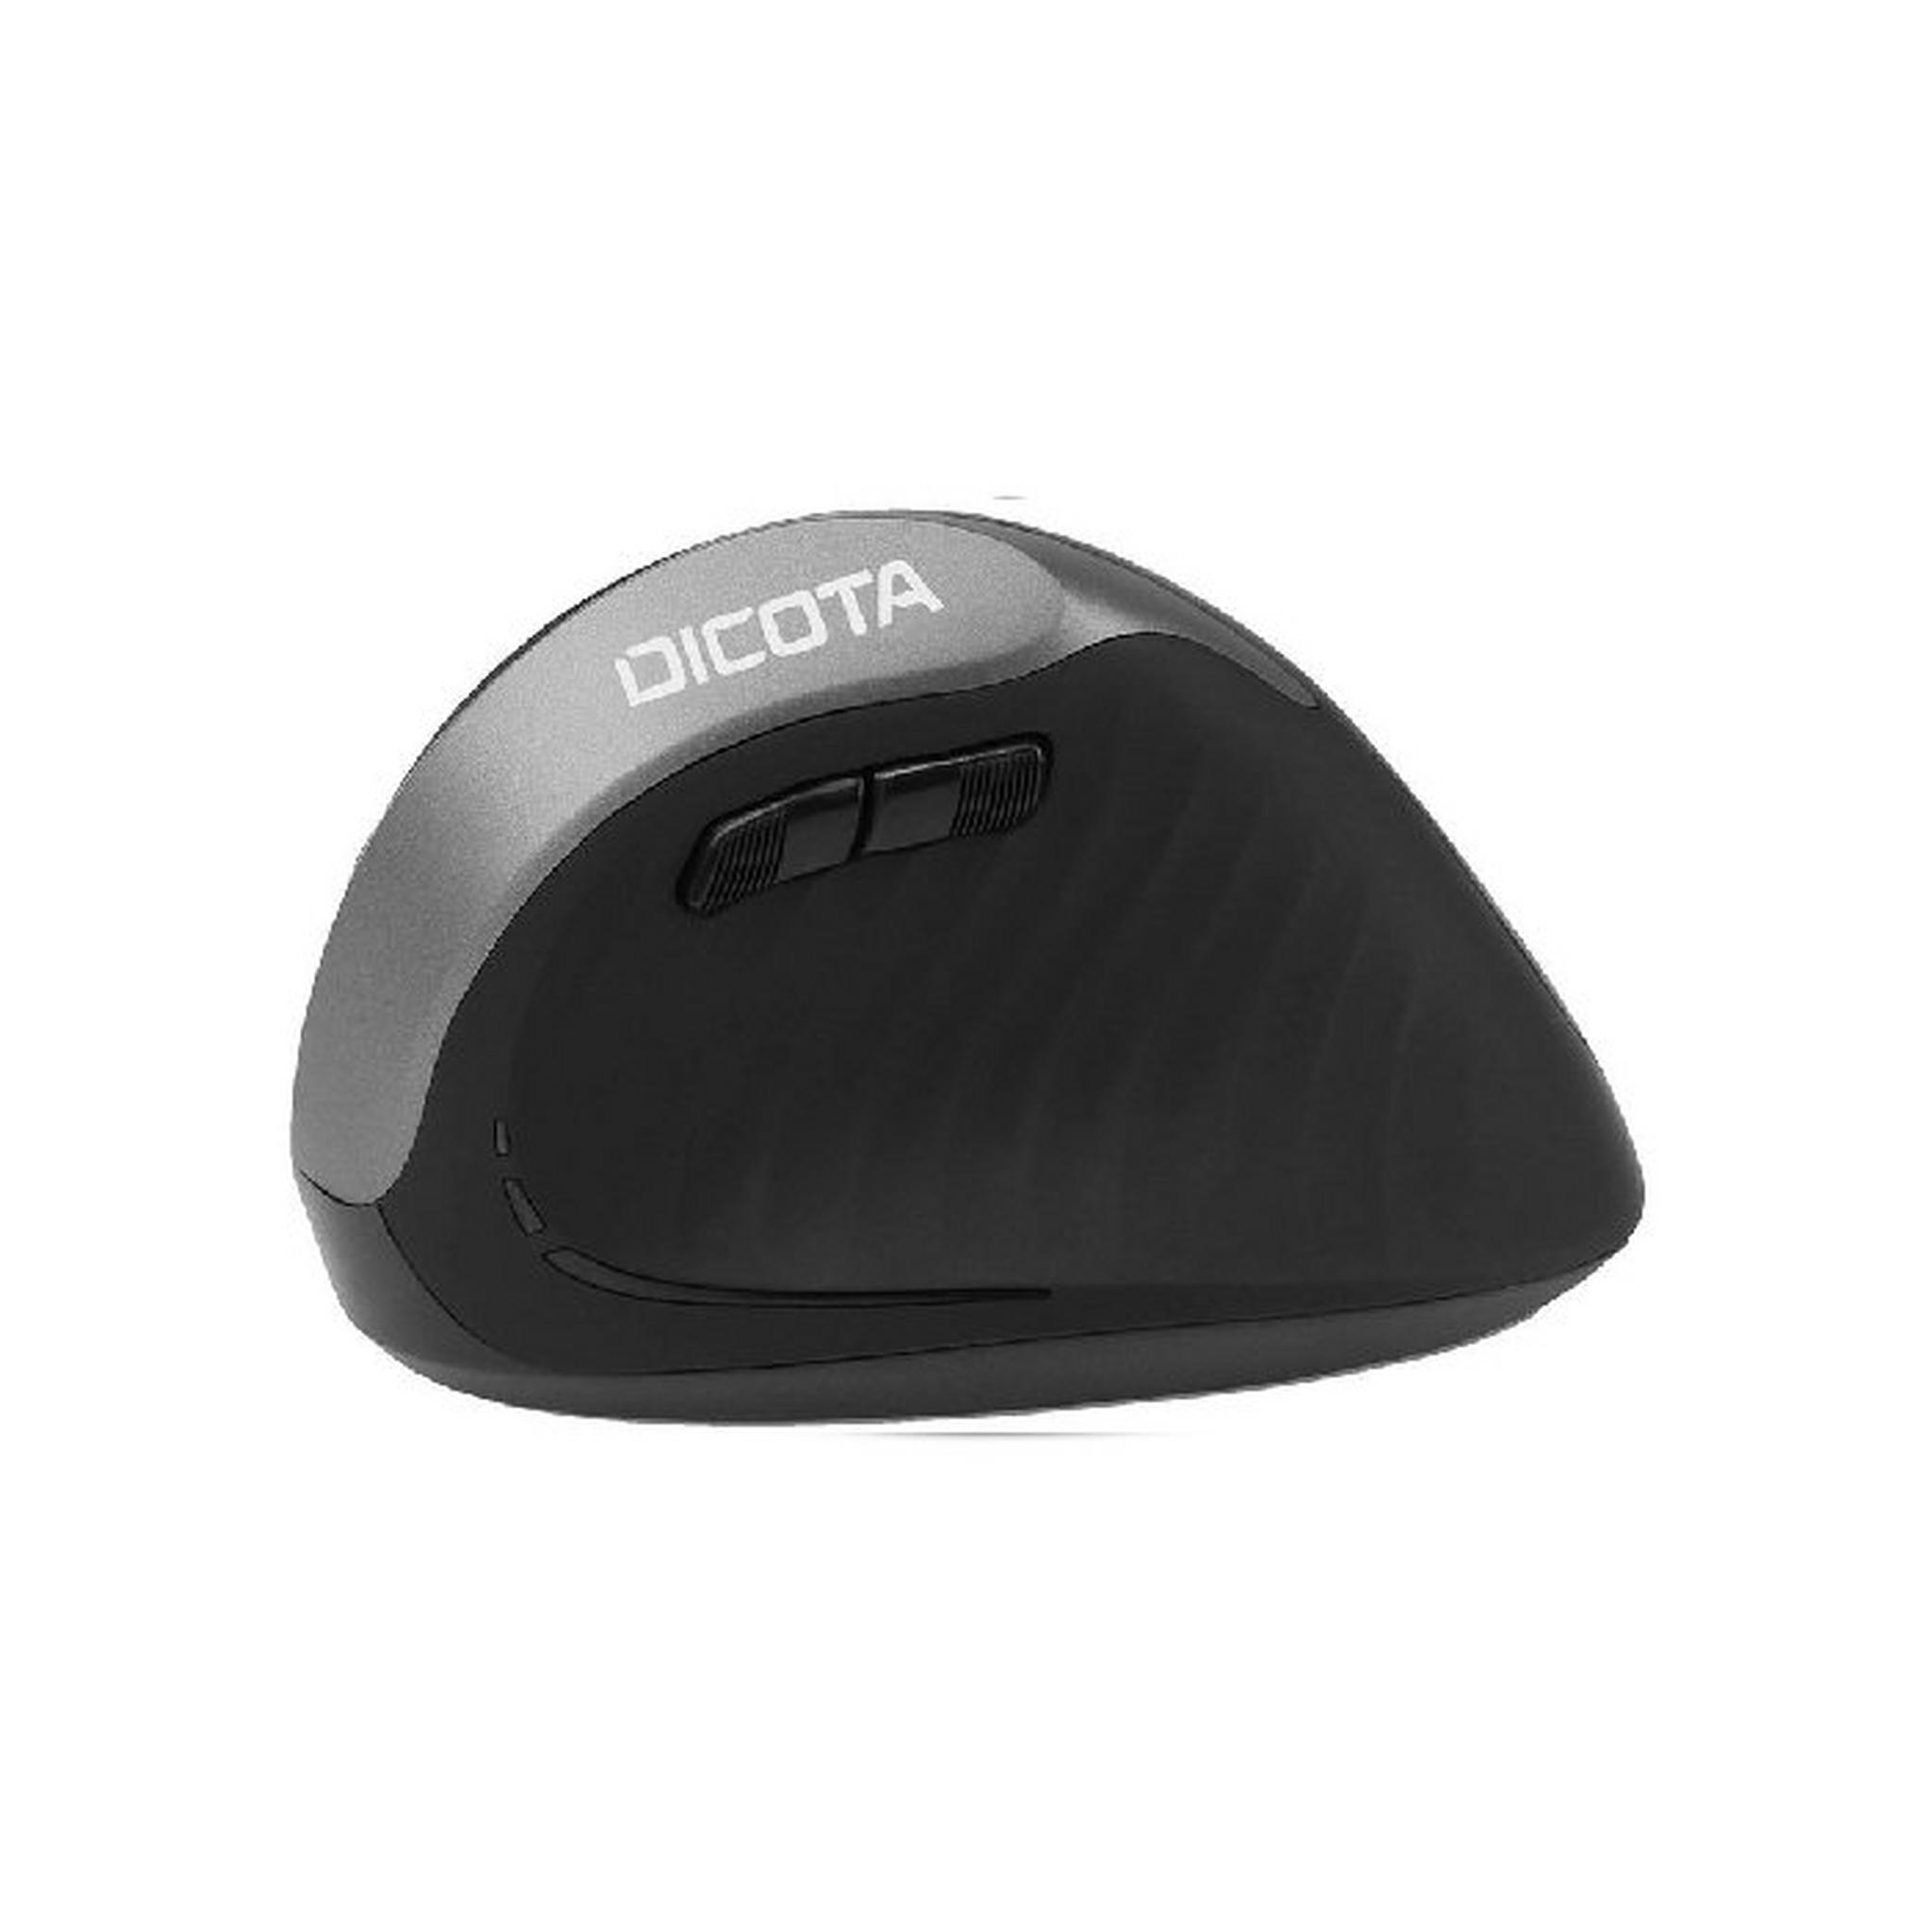 DICOTA Wireless Ergonomic Mouse Relax, D31981 - Black & Silver